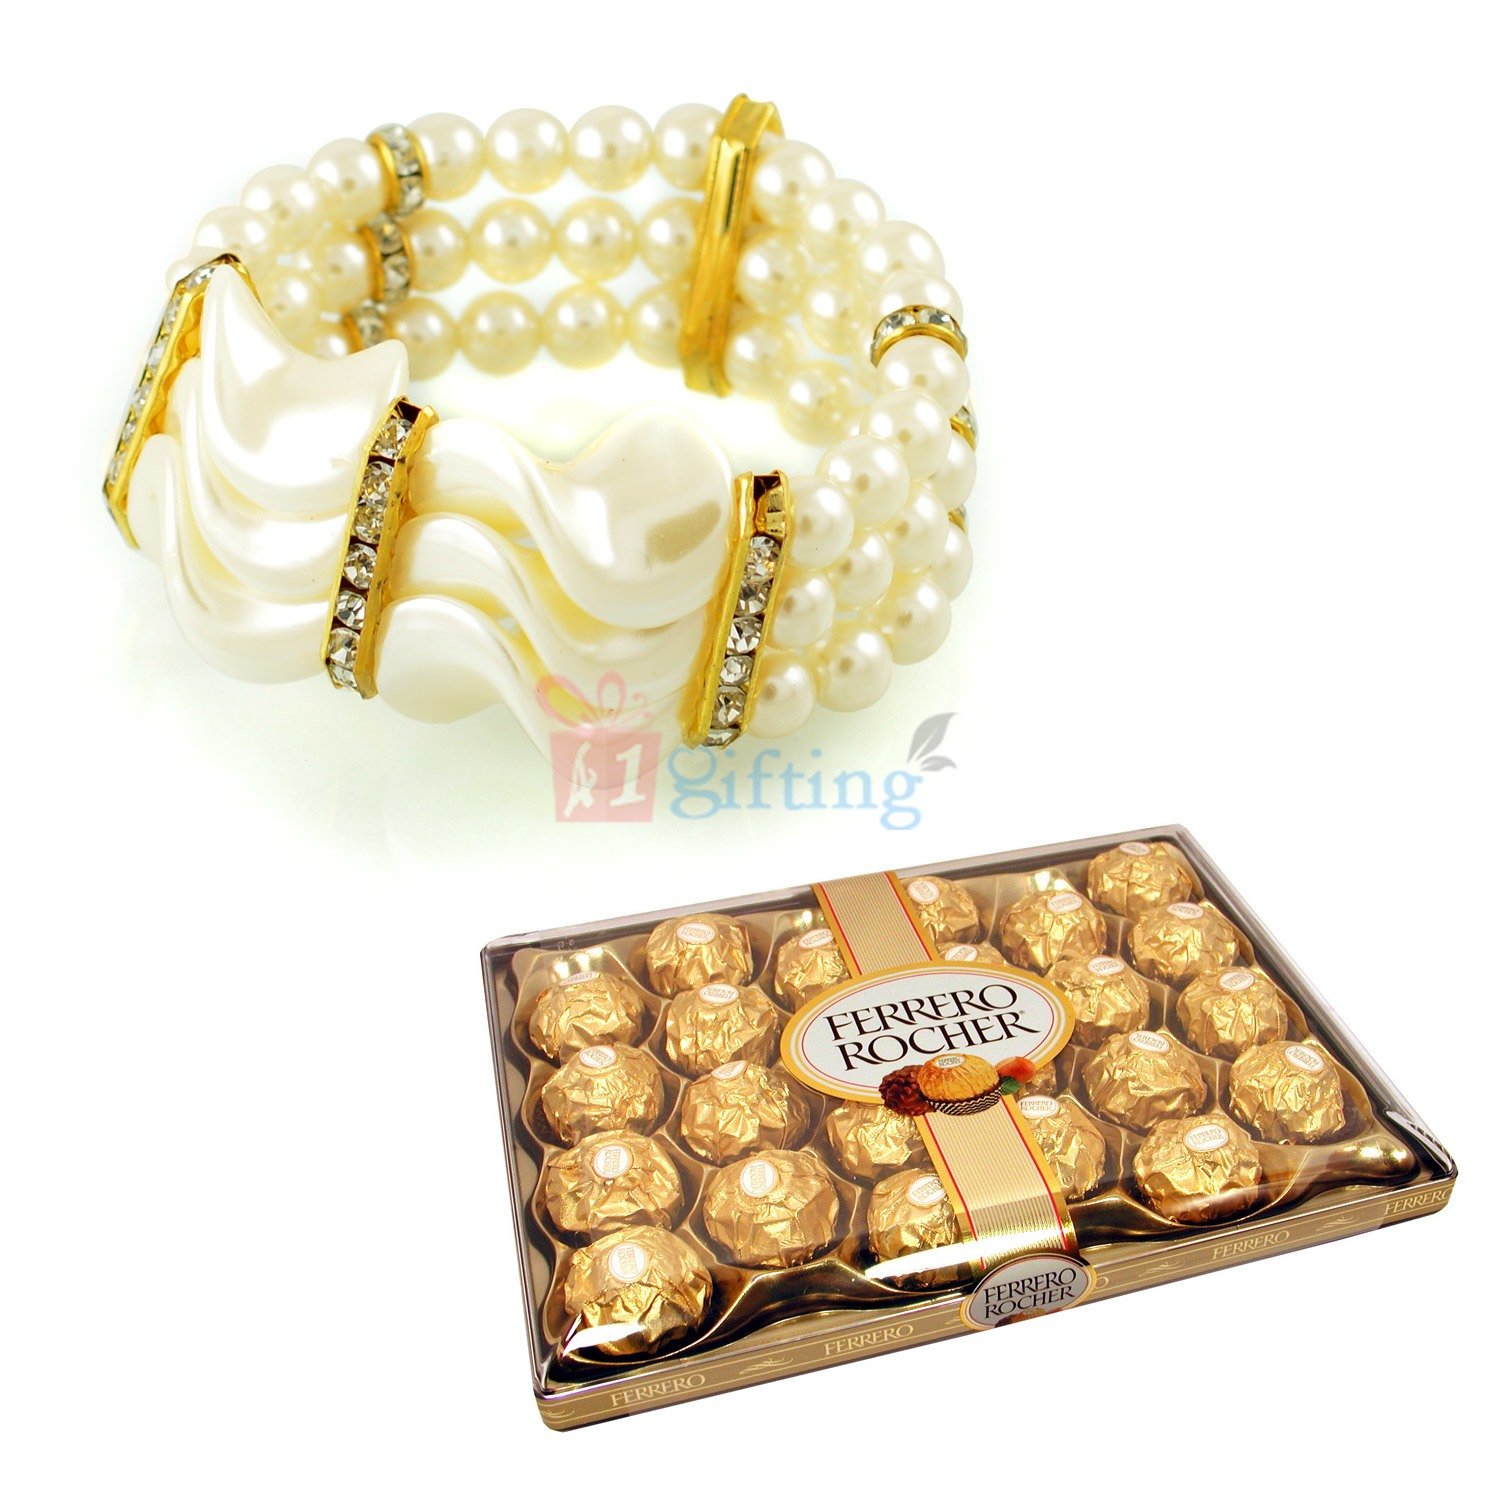 Gorgious Pearl Liner Bracelet with Ferrero Rocher 24 Chocolate